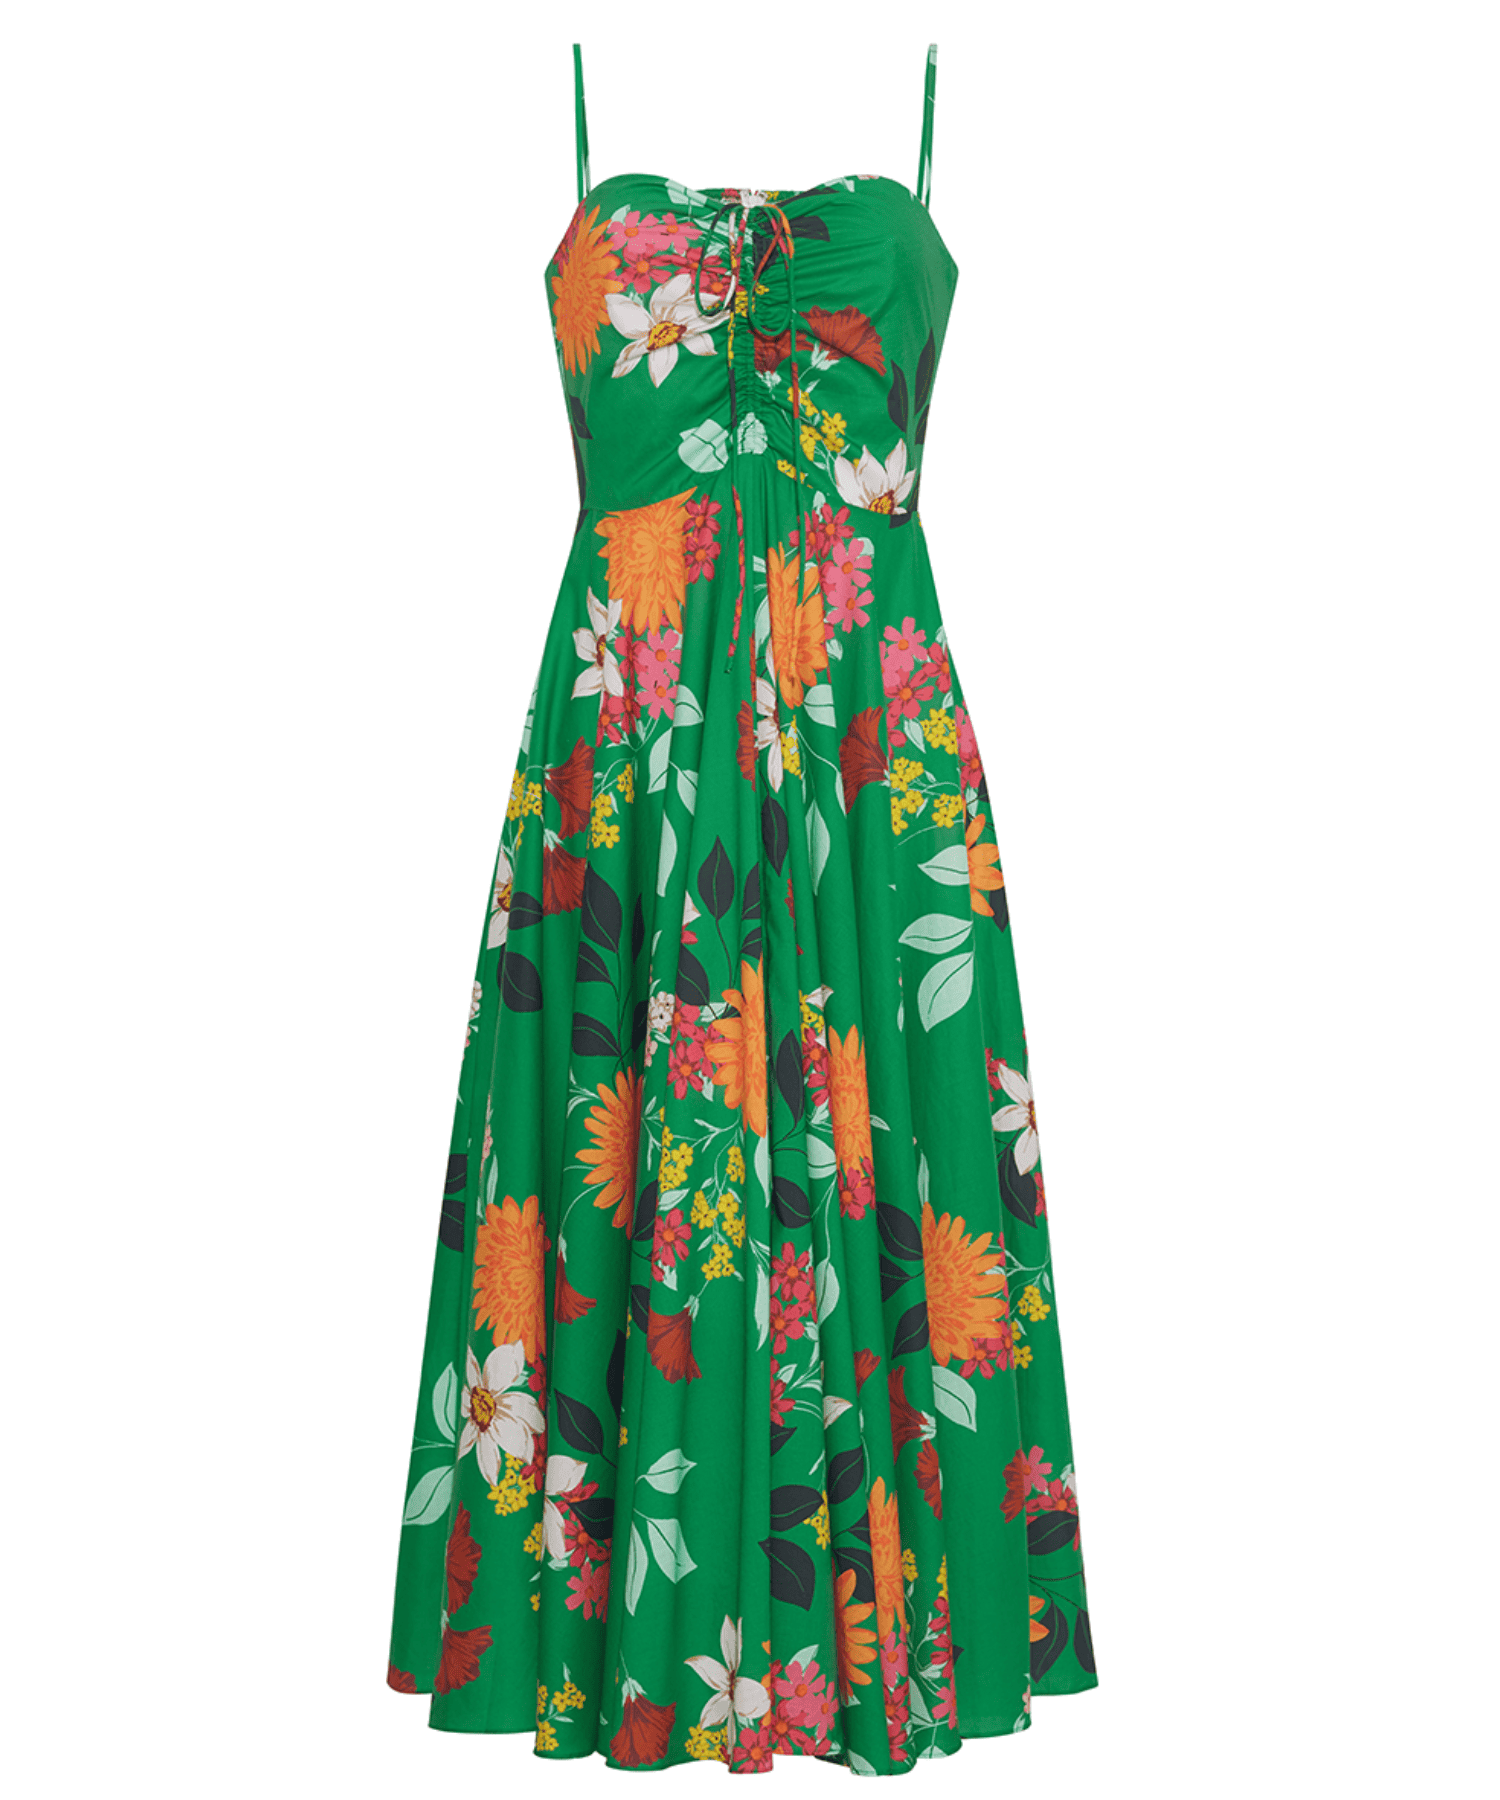 Cara Cara Punch Floral Green Maidstone Dress